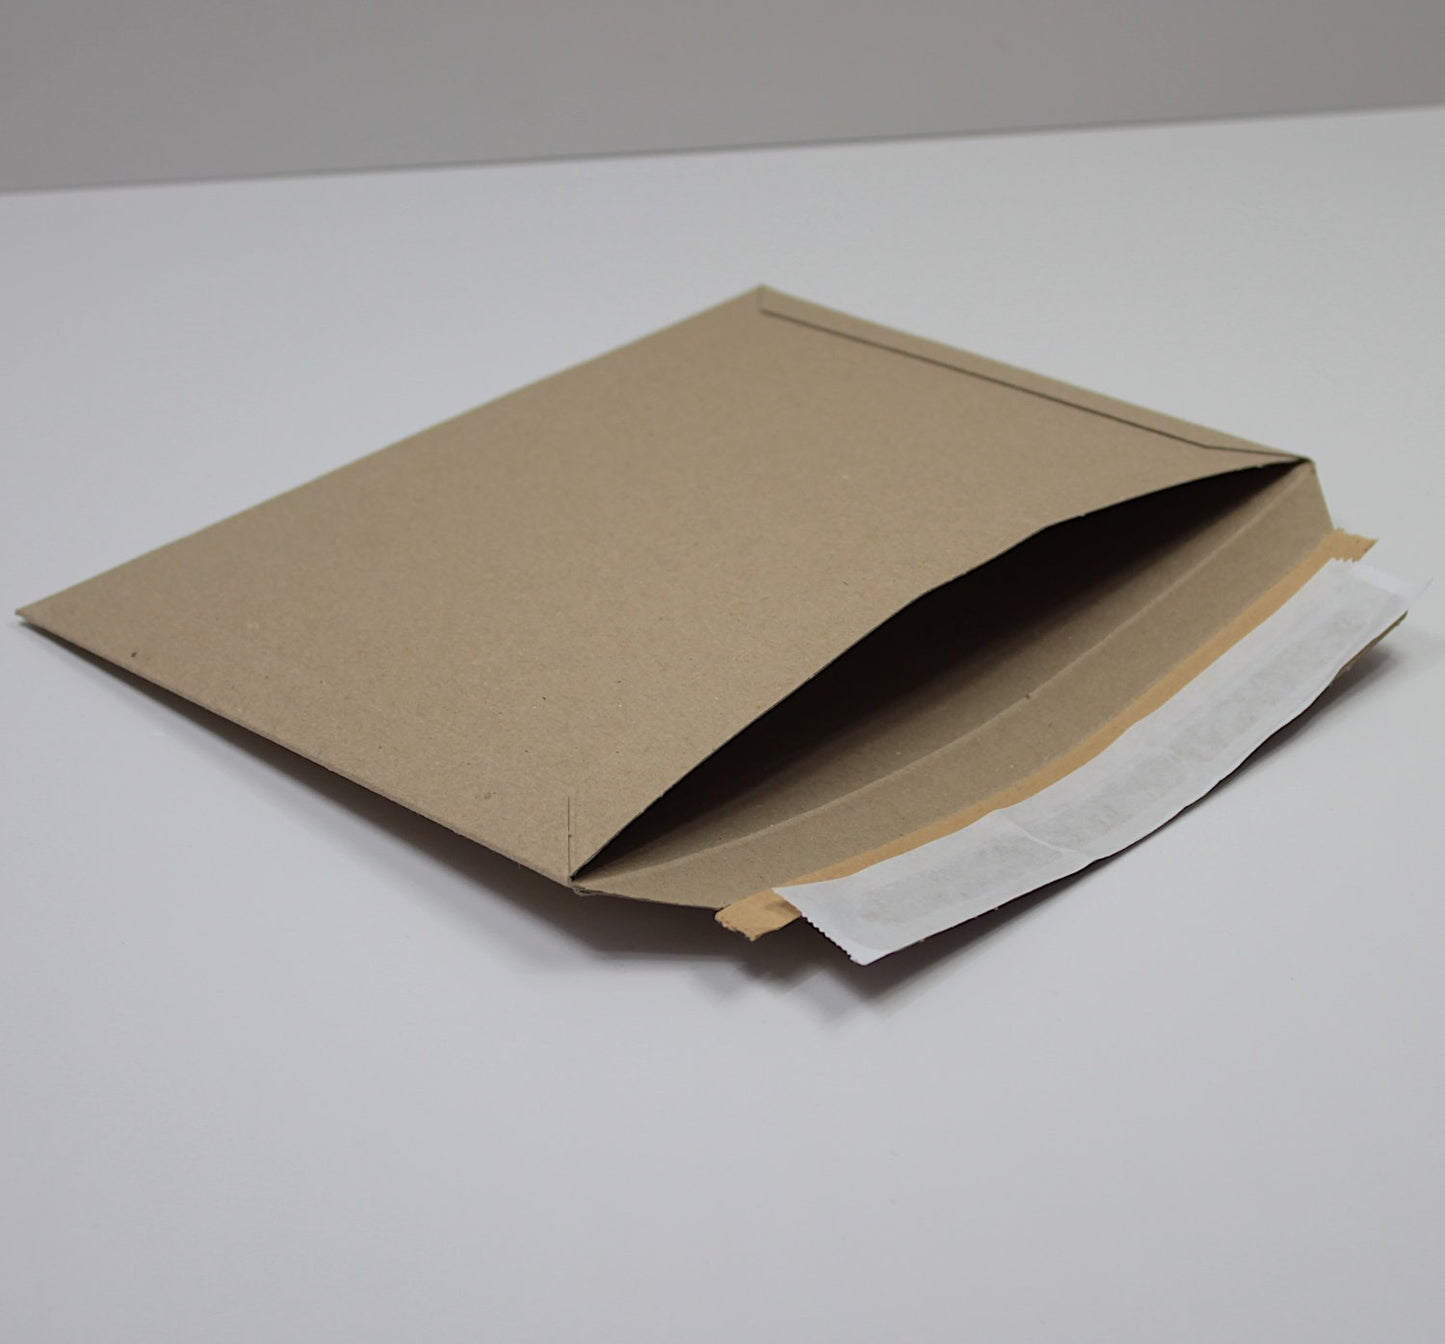 180 x 235mm Brown Cardboard Envelopes - Pack of 100